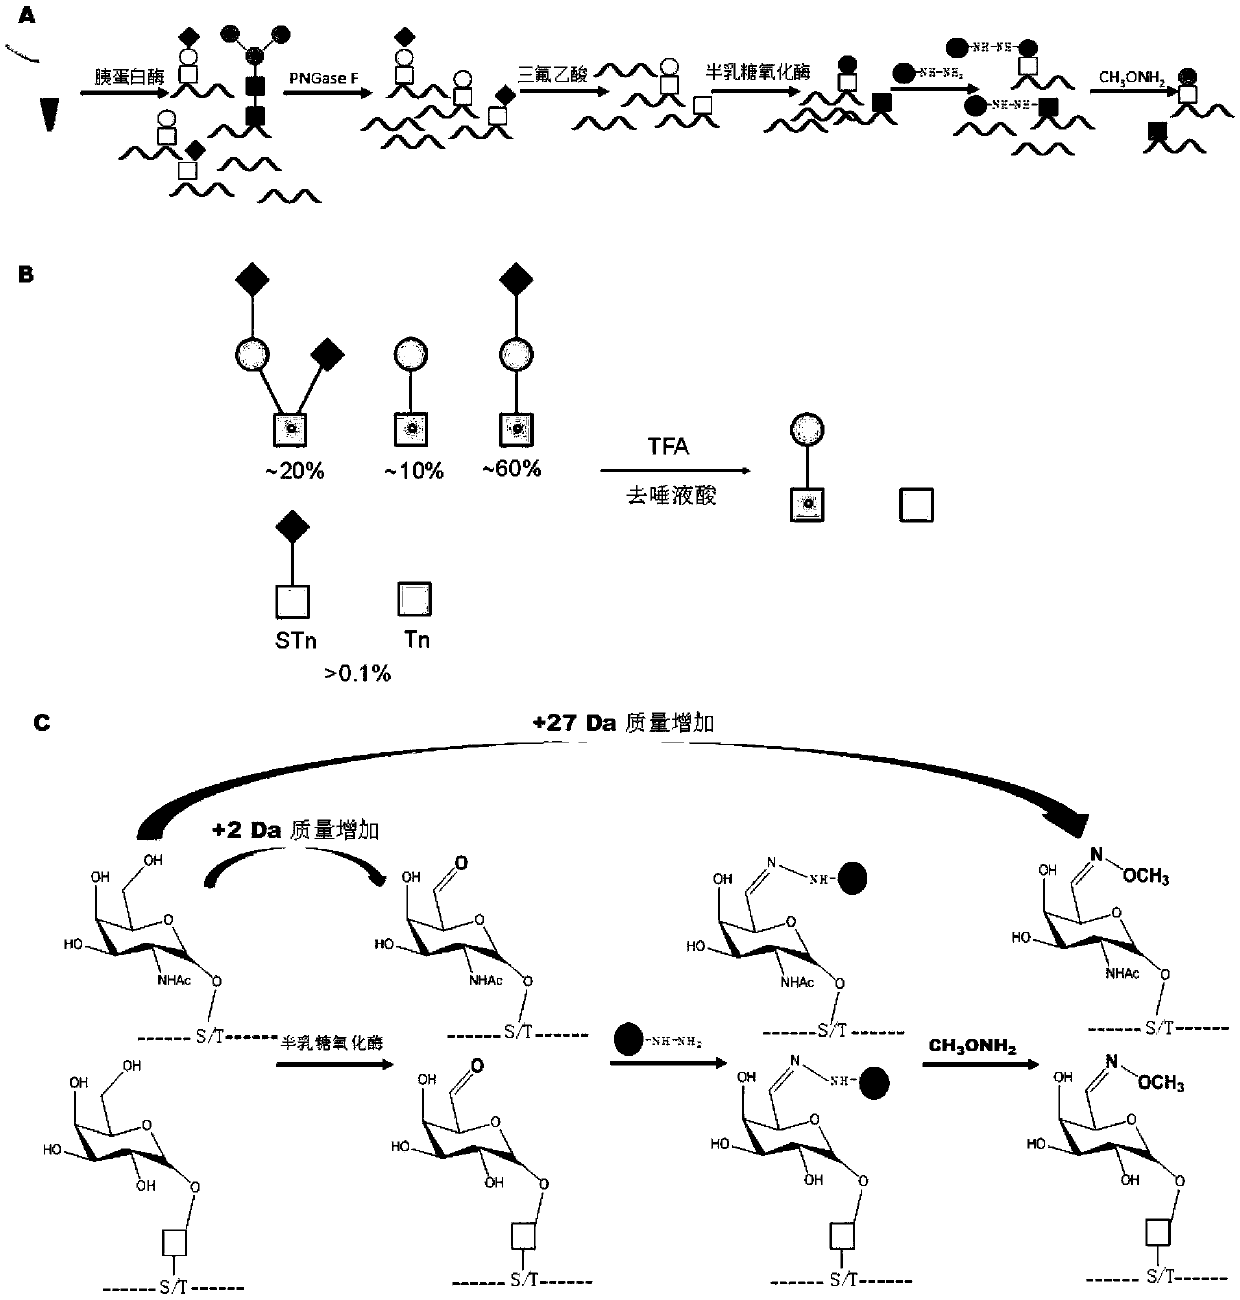 Human serum O-glycosylation identification method based on chemical enzymatic catalysis